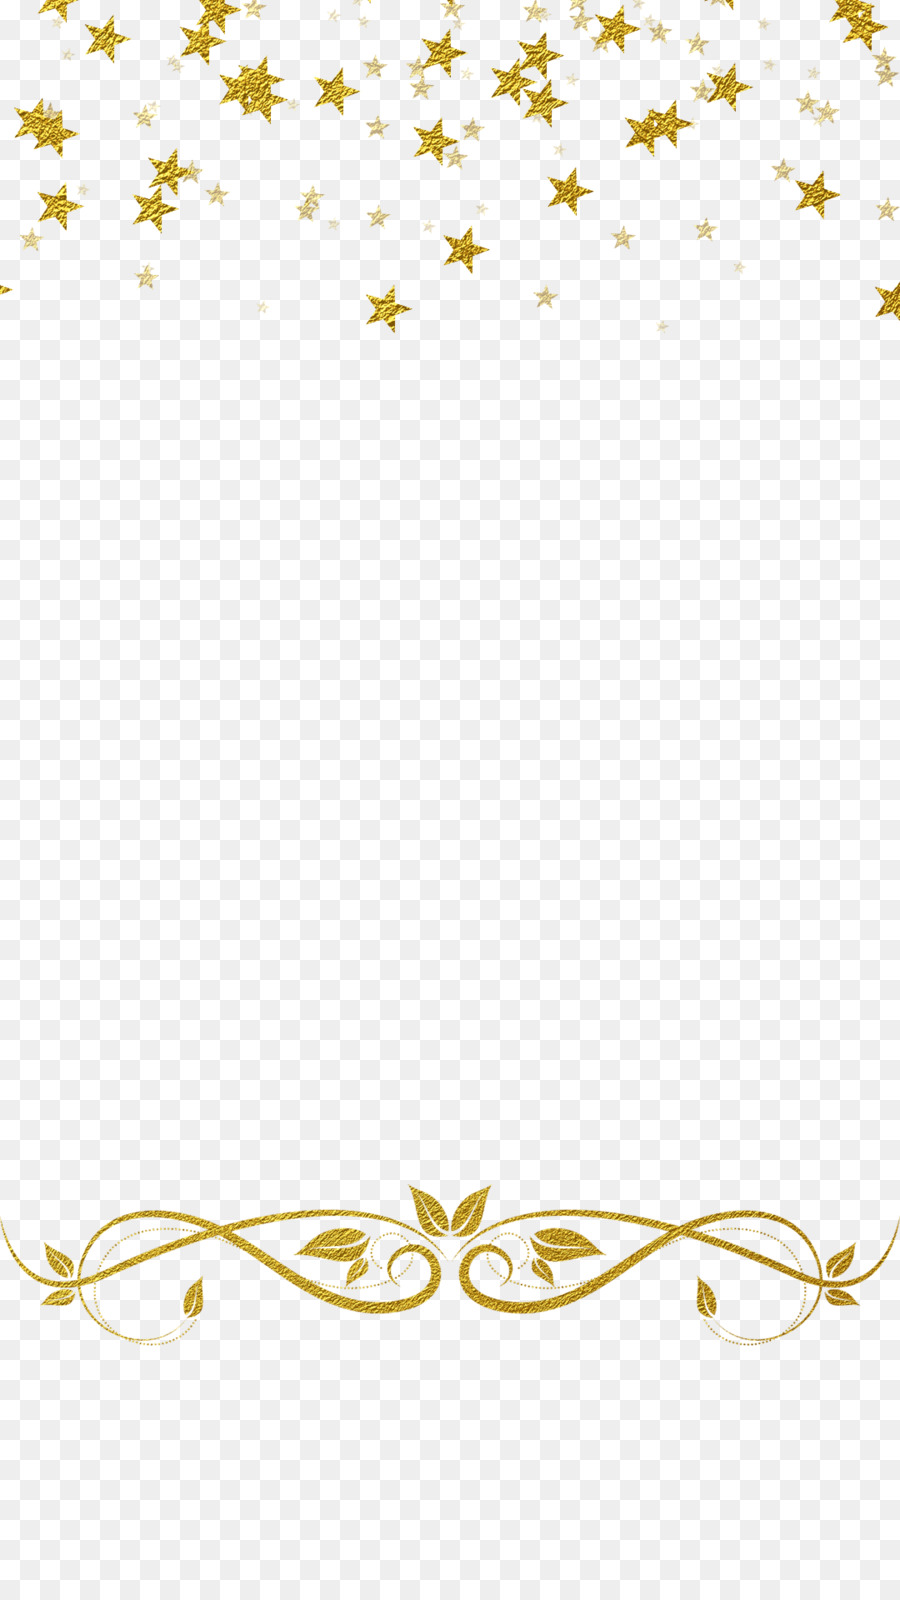 Gold Star Snapchat Clip art - gold png download - 1080*1920 - Free Transparent Gold png Download.